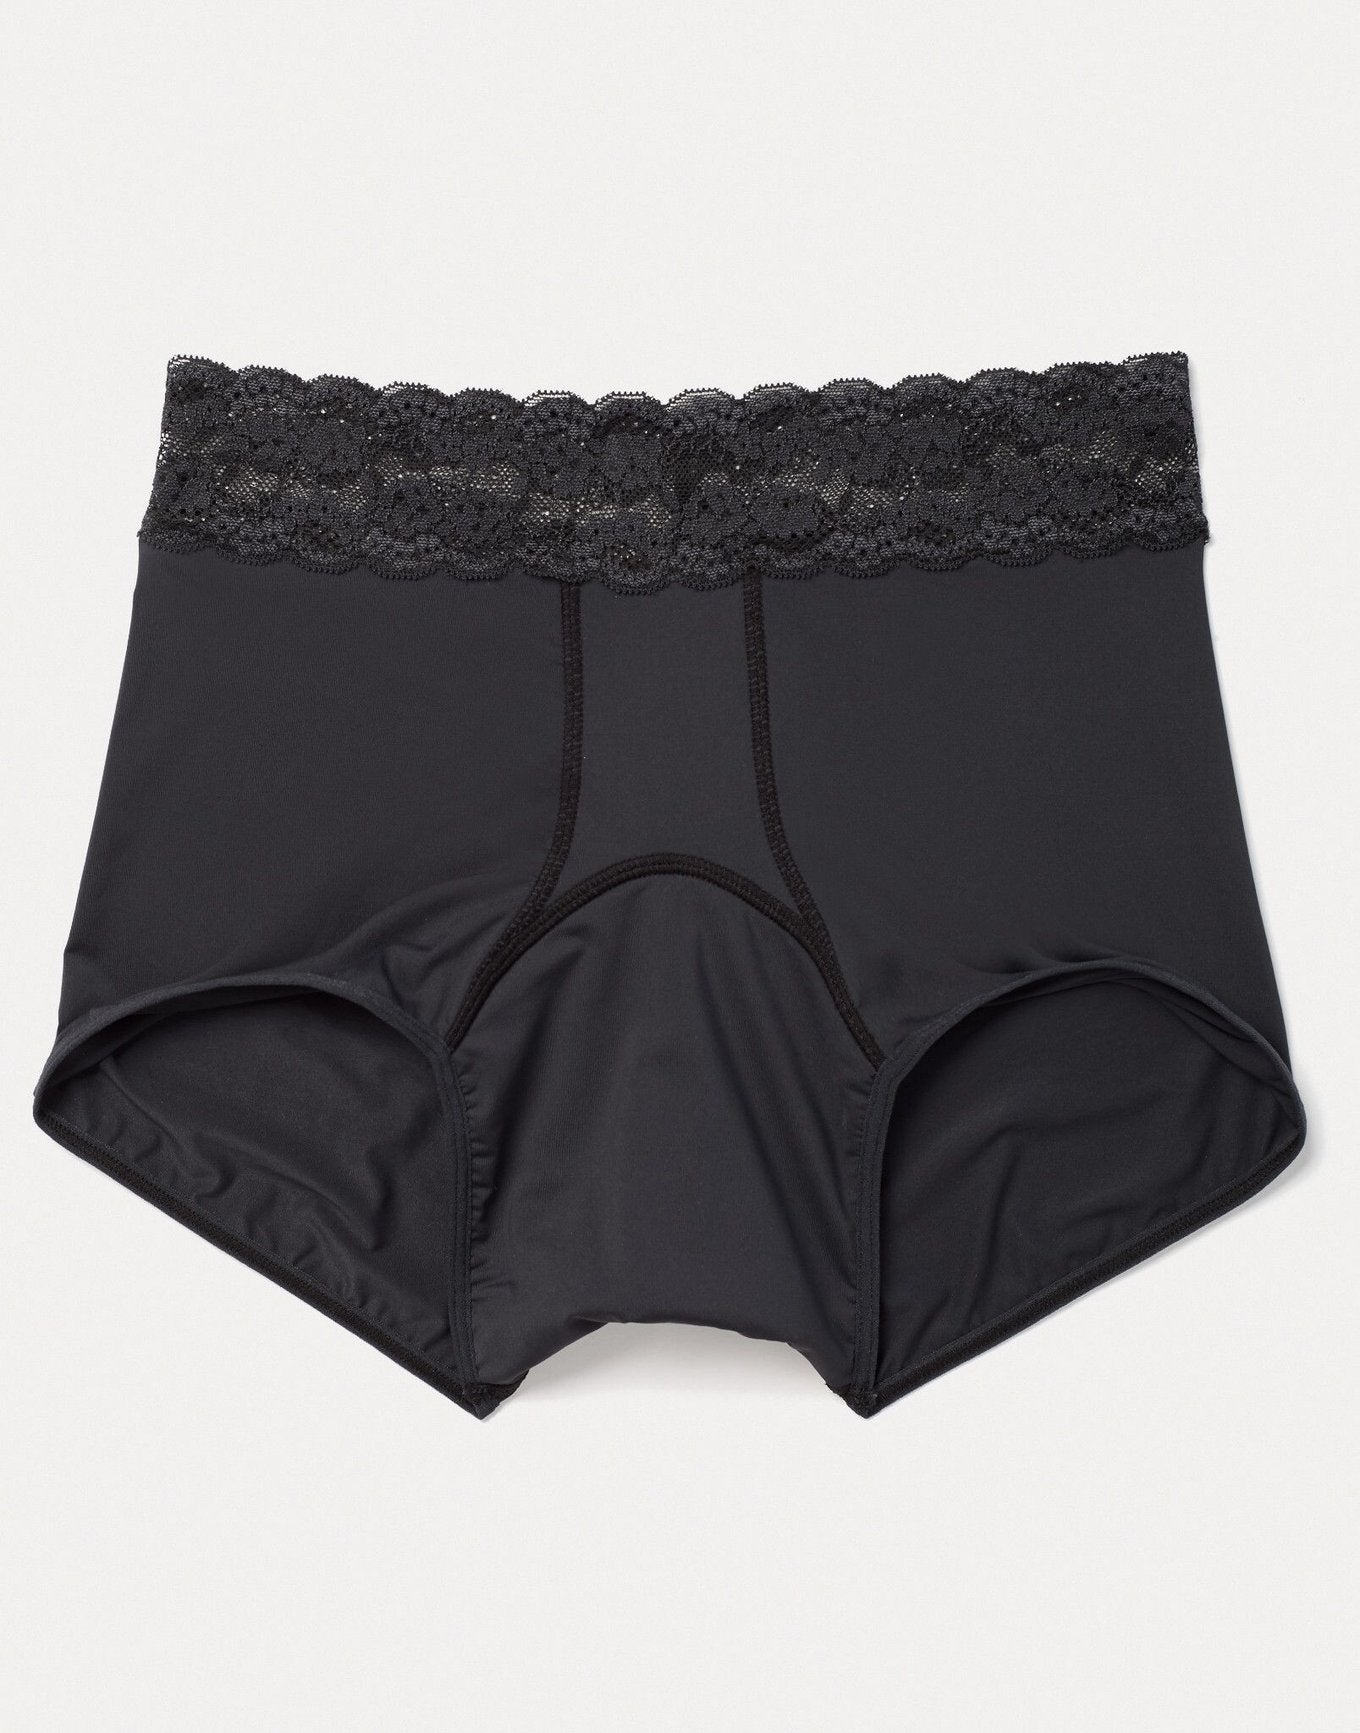 Joyja Emily period-proof panty in color Jet Black and shape shortie